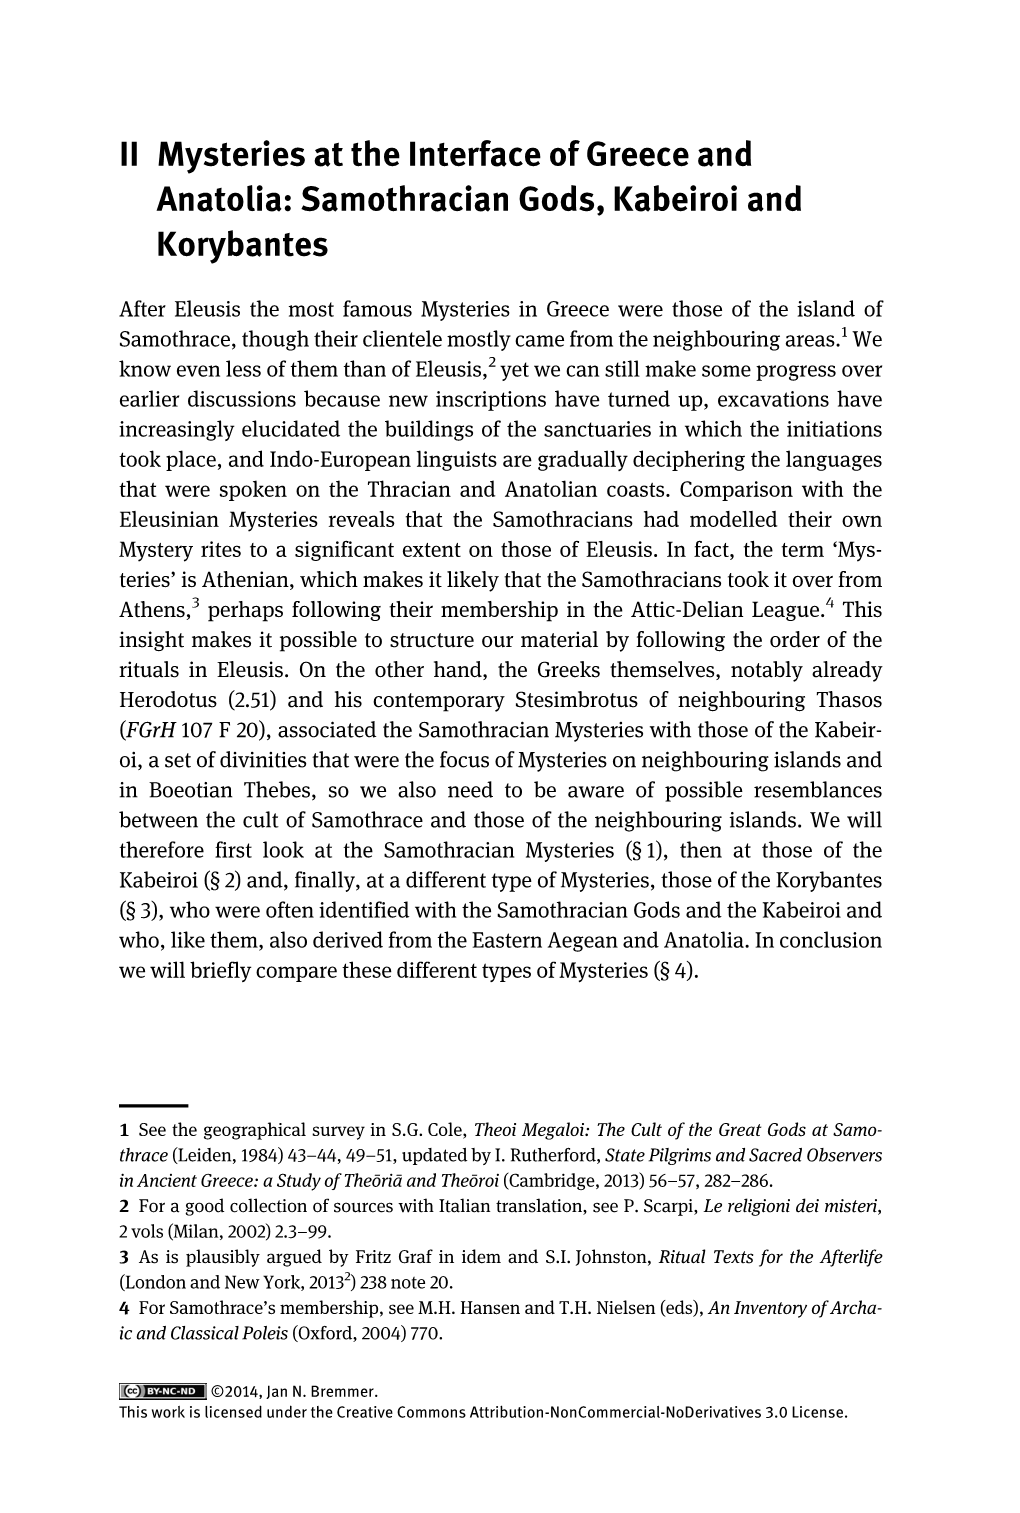 II Mysteries at the Interface of Greece and Anatolia: Samothracian Gods, Kabeiroi and Korybantes